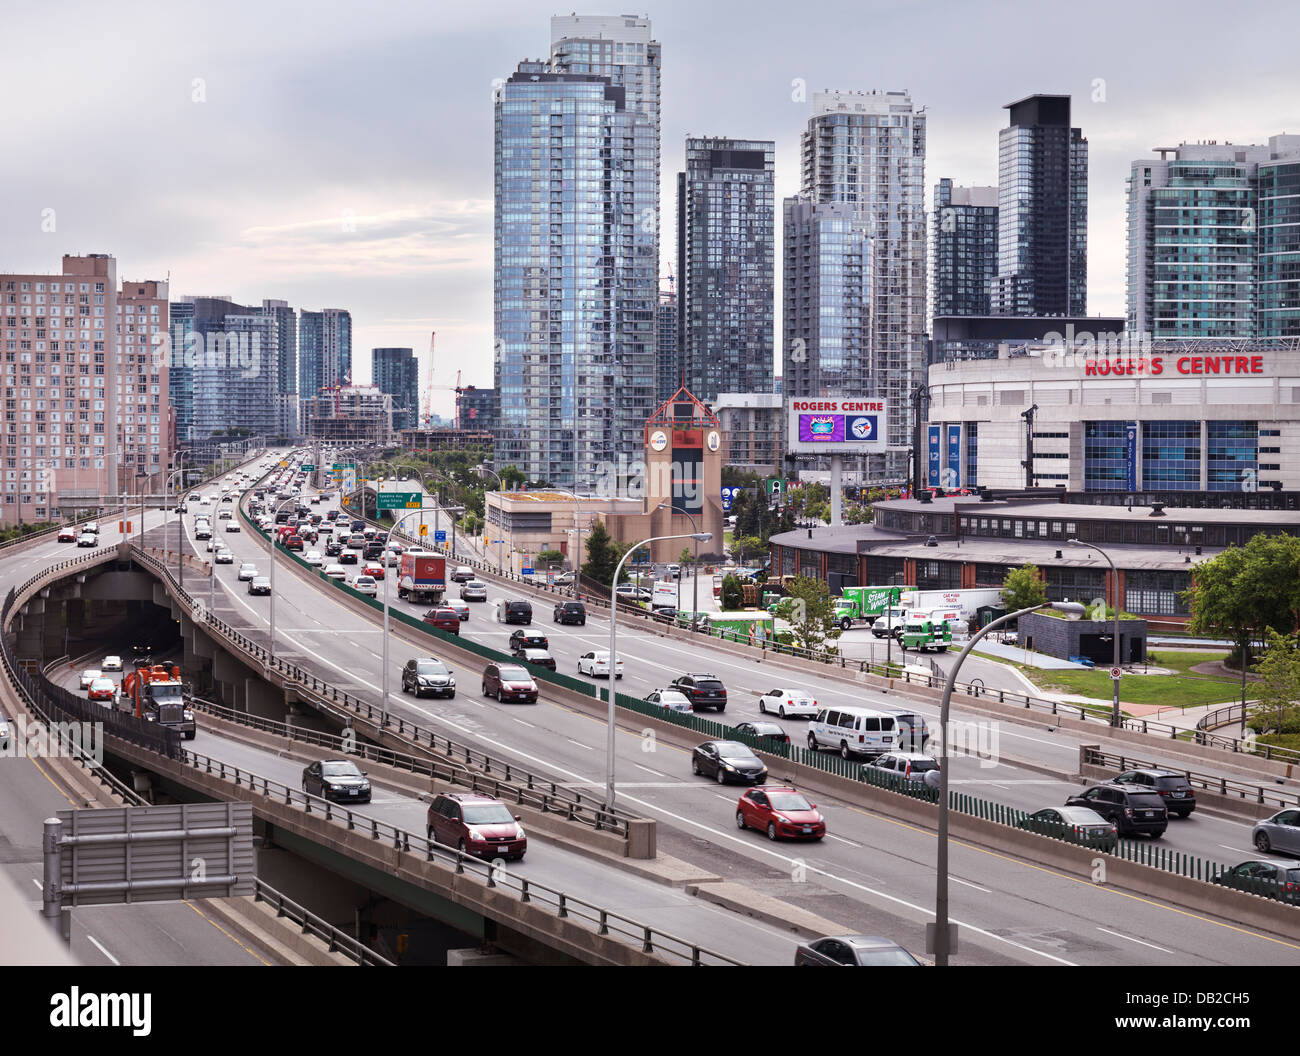 Le centre-ville de Toronto le Gardiner Expressway, l'autoroute express Gardiner, Ontario, Canada 2013. Banque D'Images